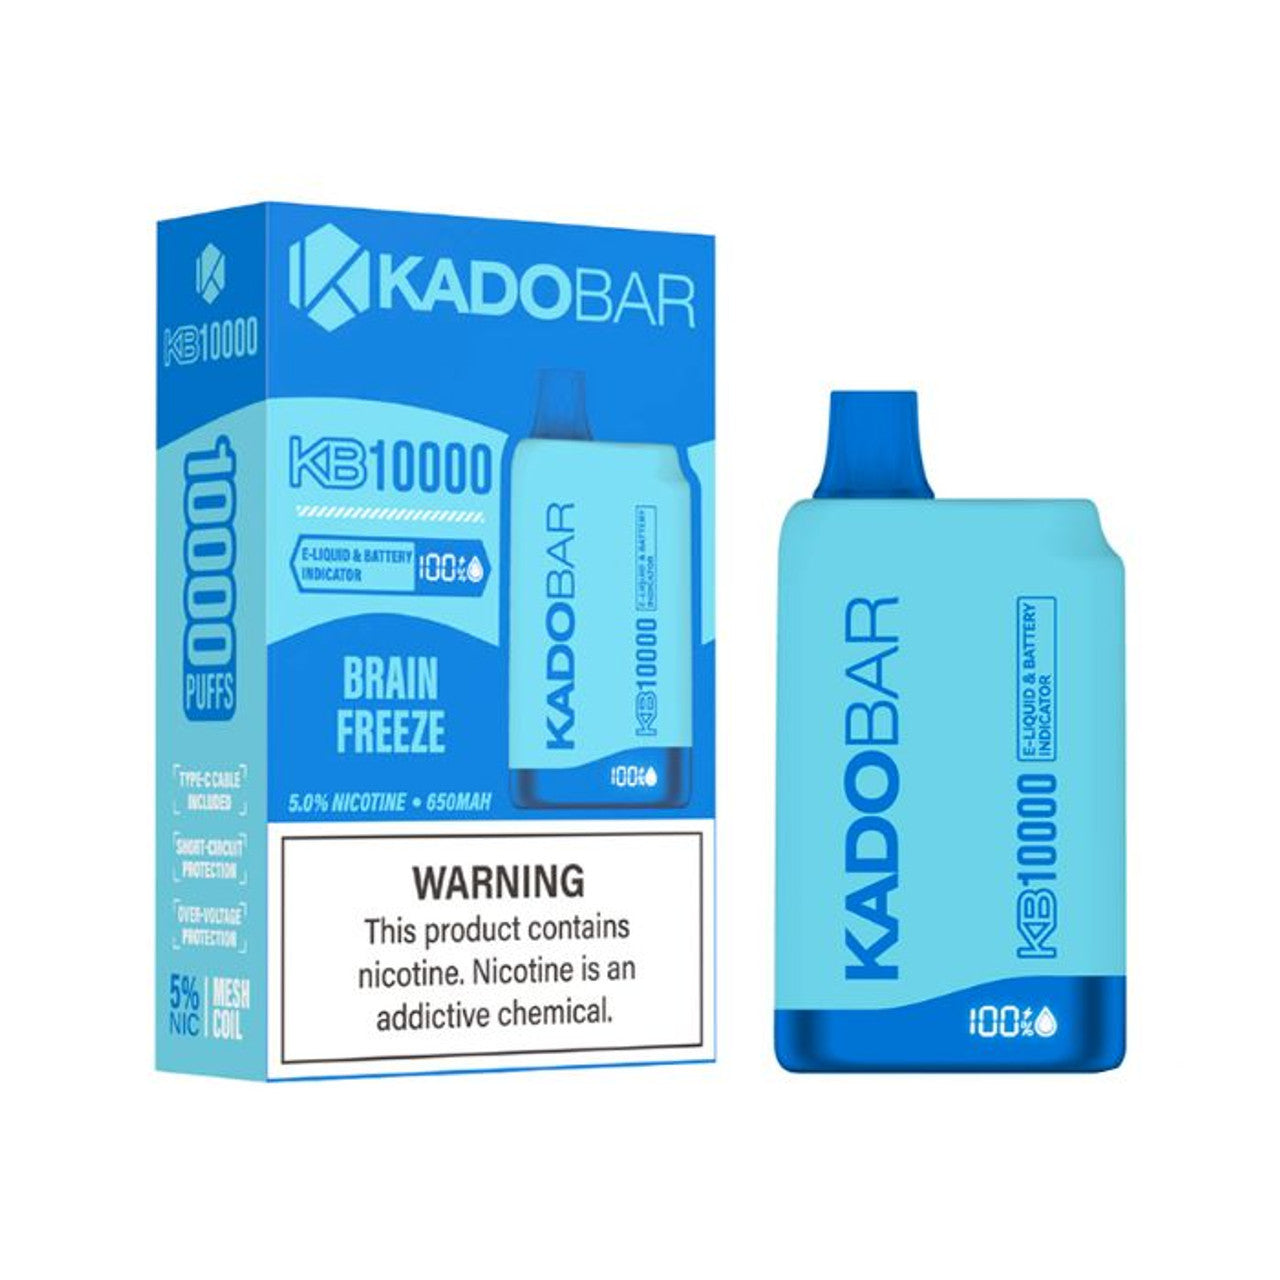 Kado Bar KB10000 Brain Freeze  